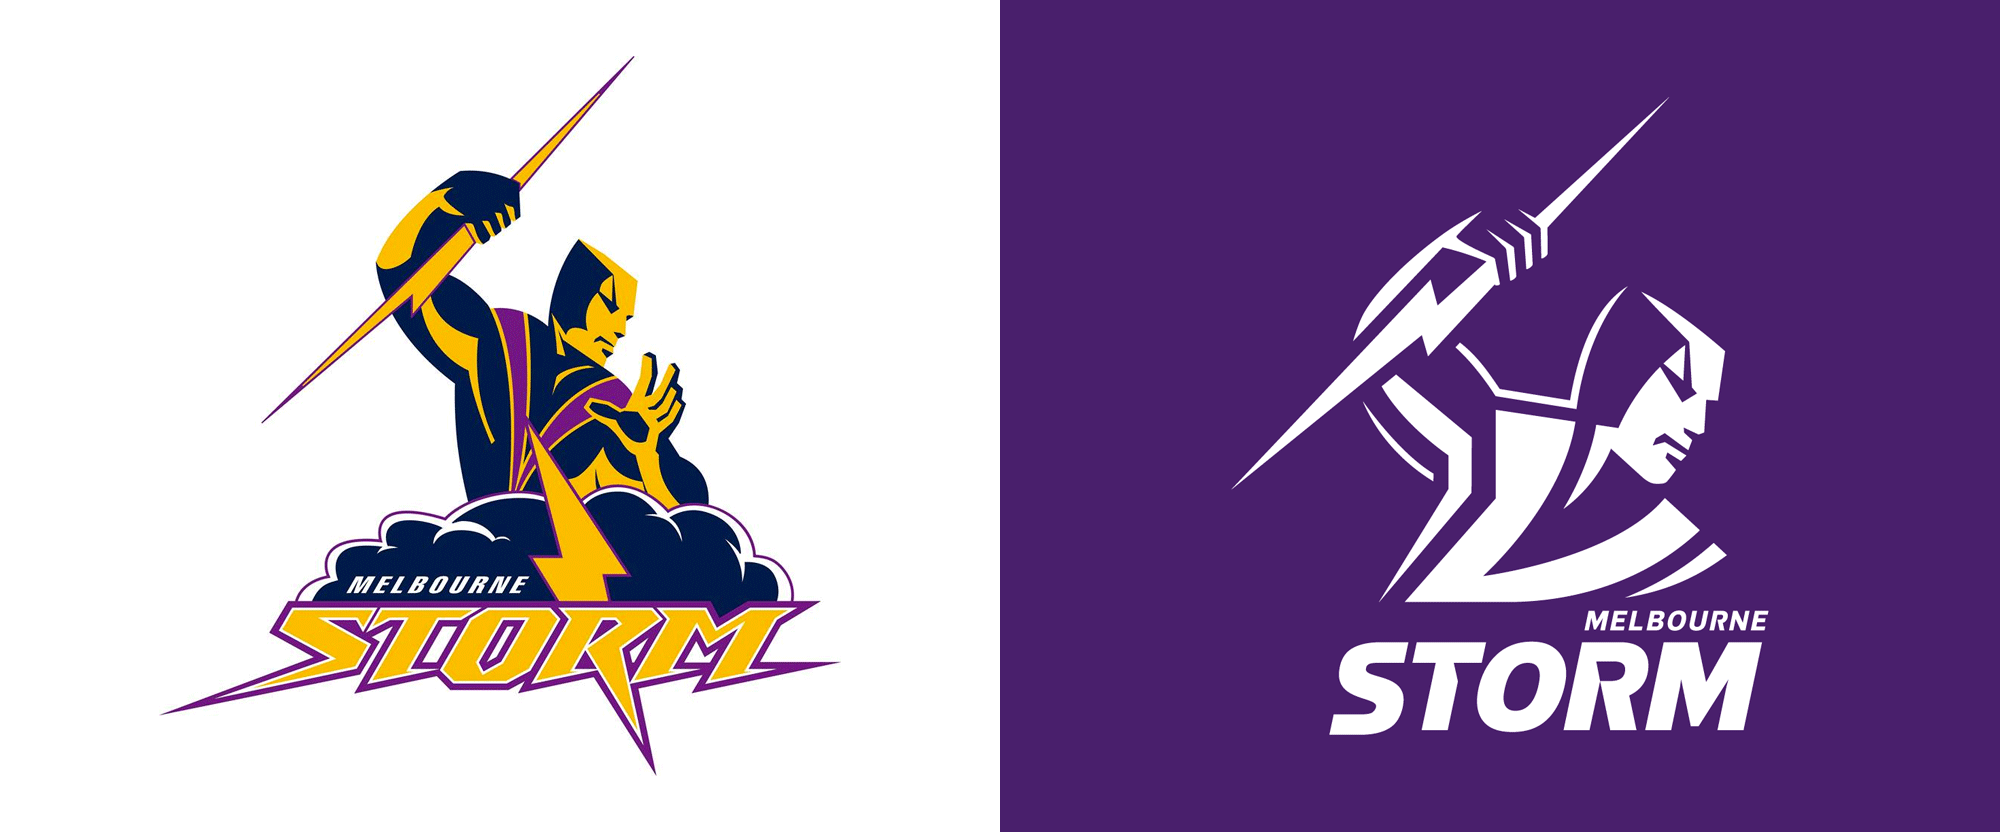 Storm Logo - Brand New: New Logo for Melbourne Storm by WiteKite